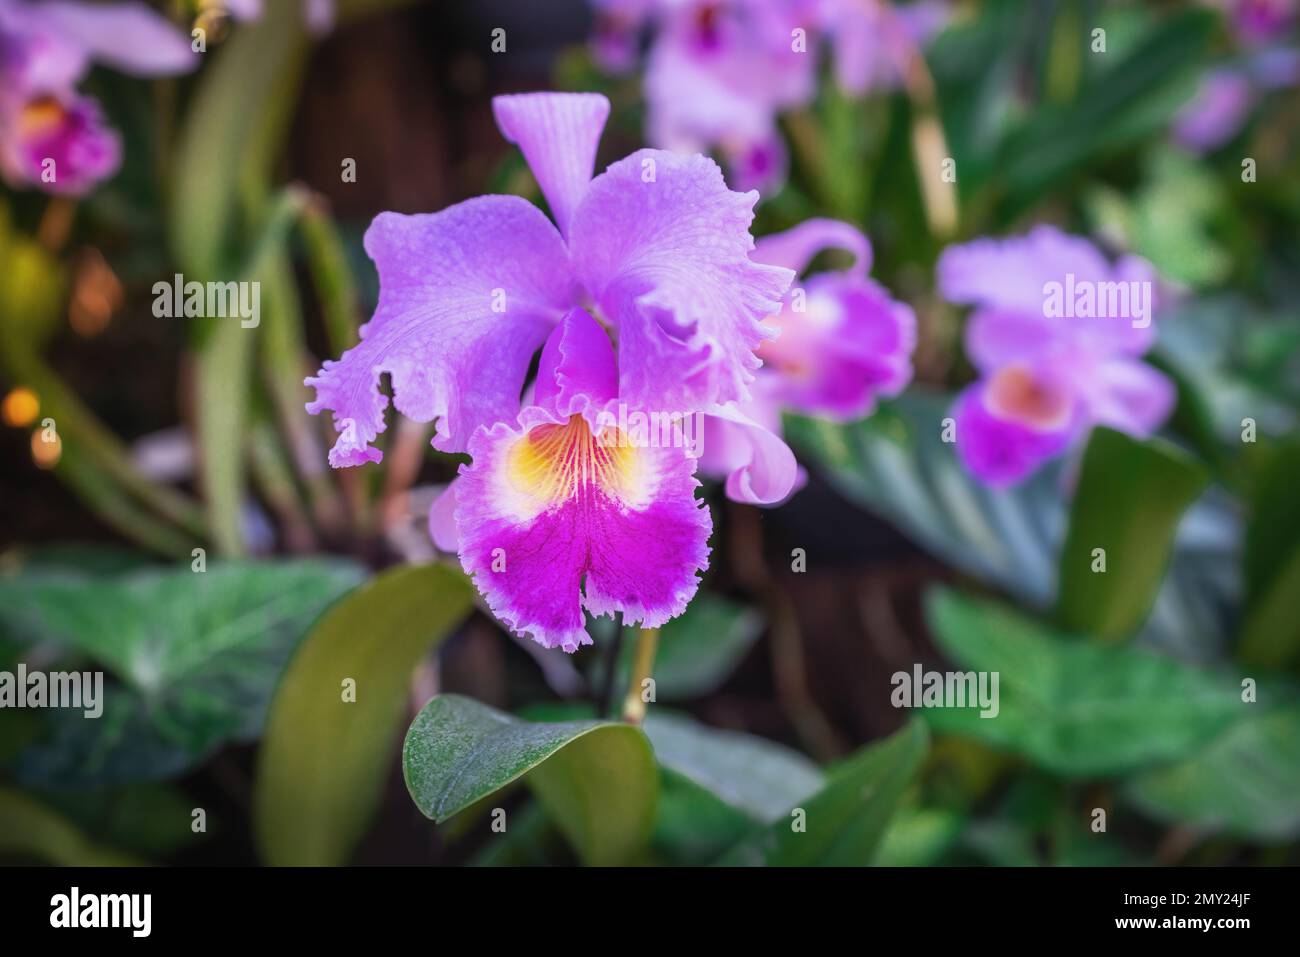 Pink Cattleya Orchid Flower on a garden Stock Photo